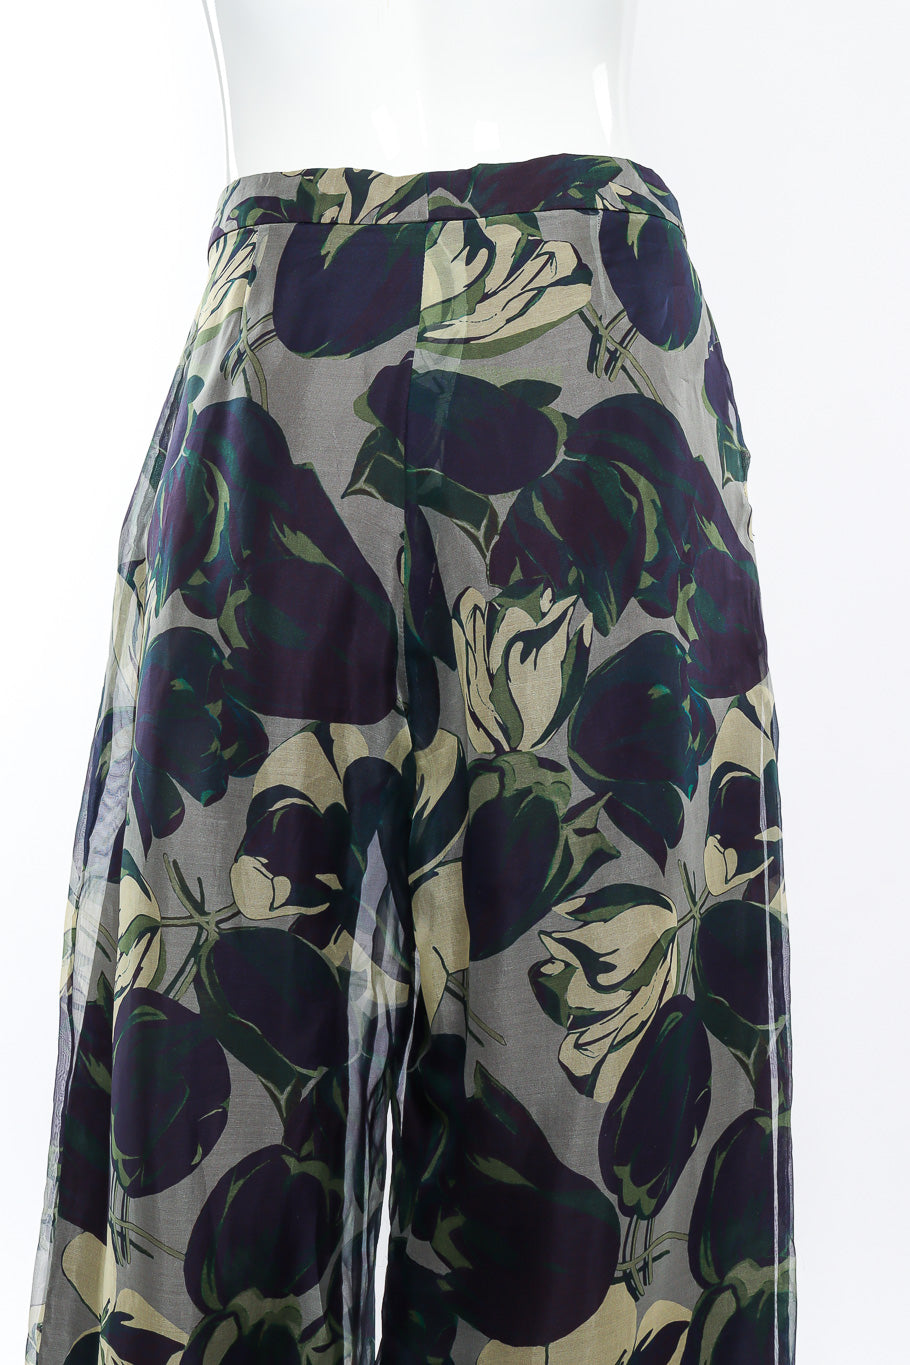 Dries Van Noten Floral Silk Lounge Pant front view on mannequin closeup @Recessla